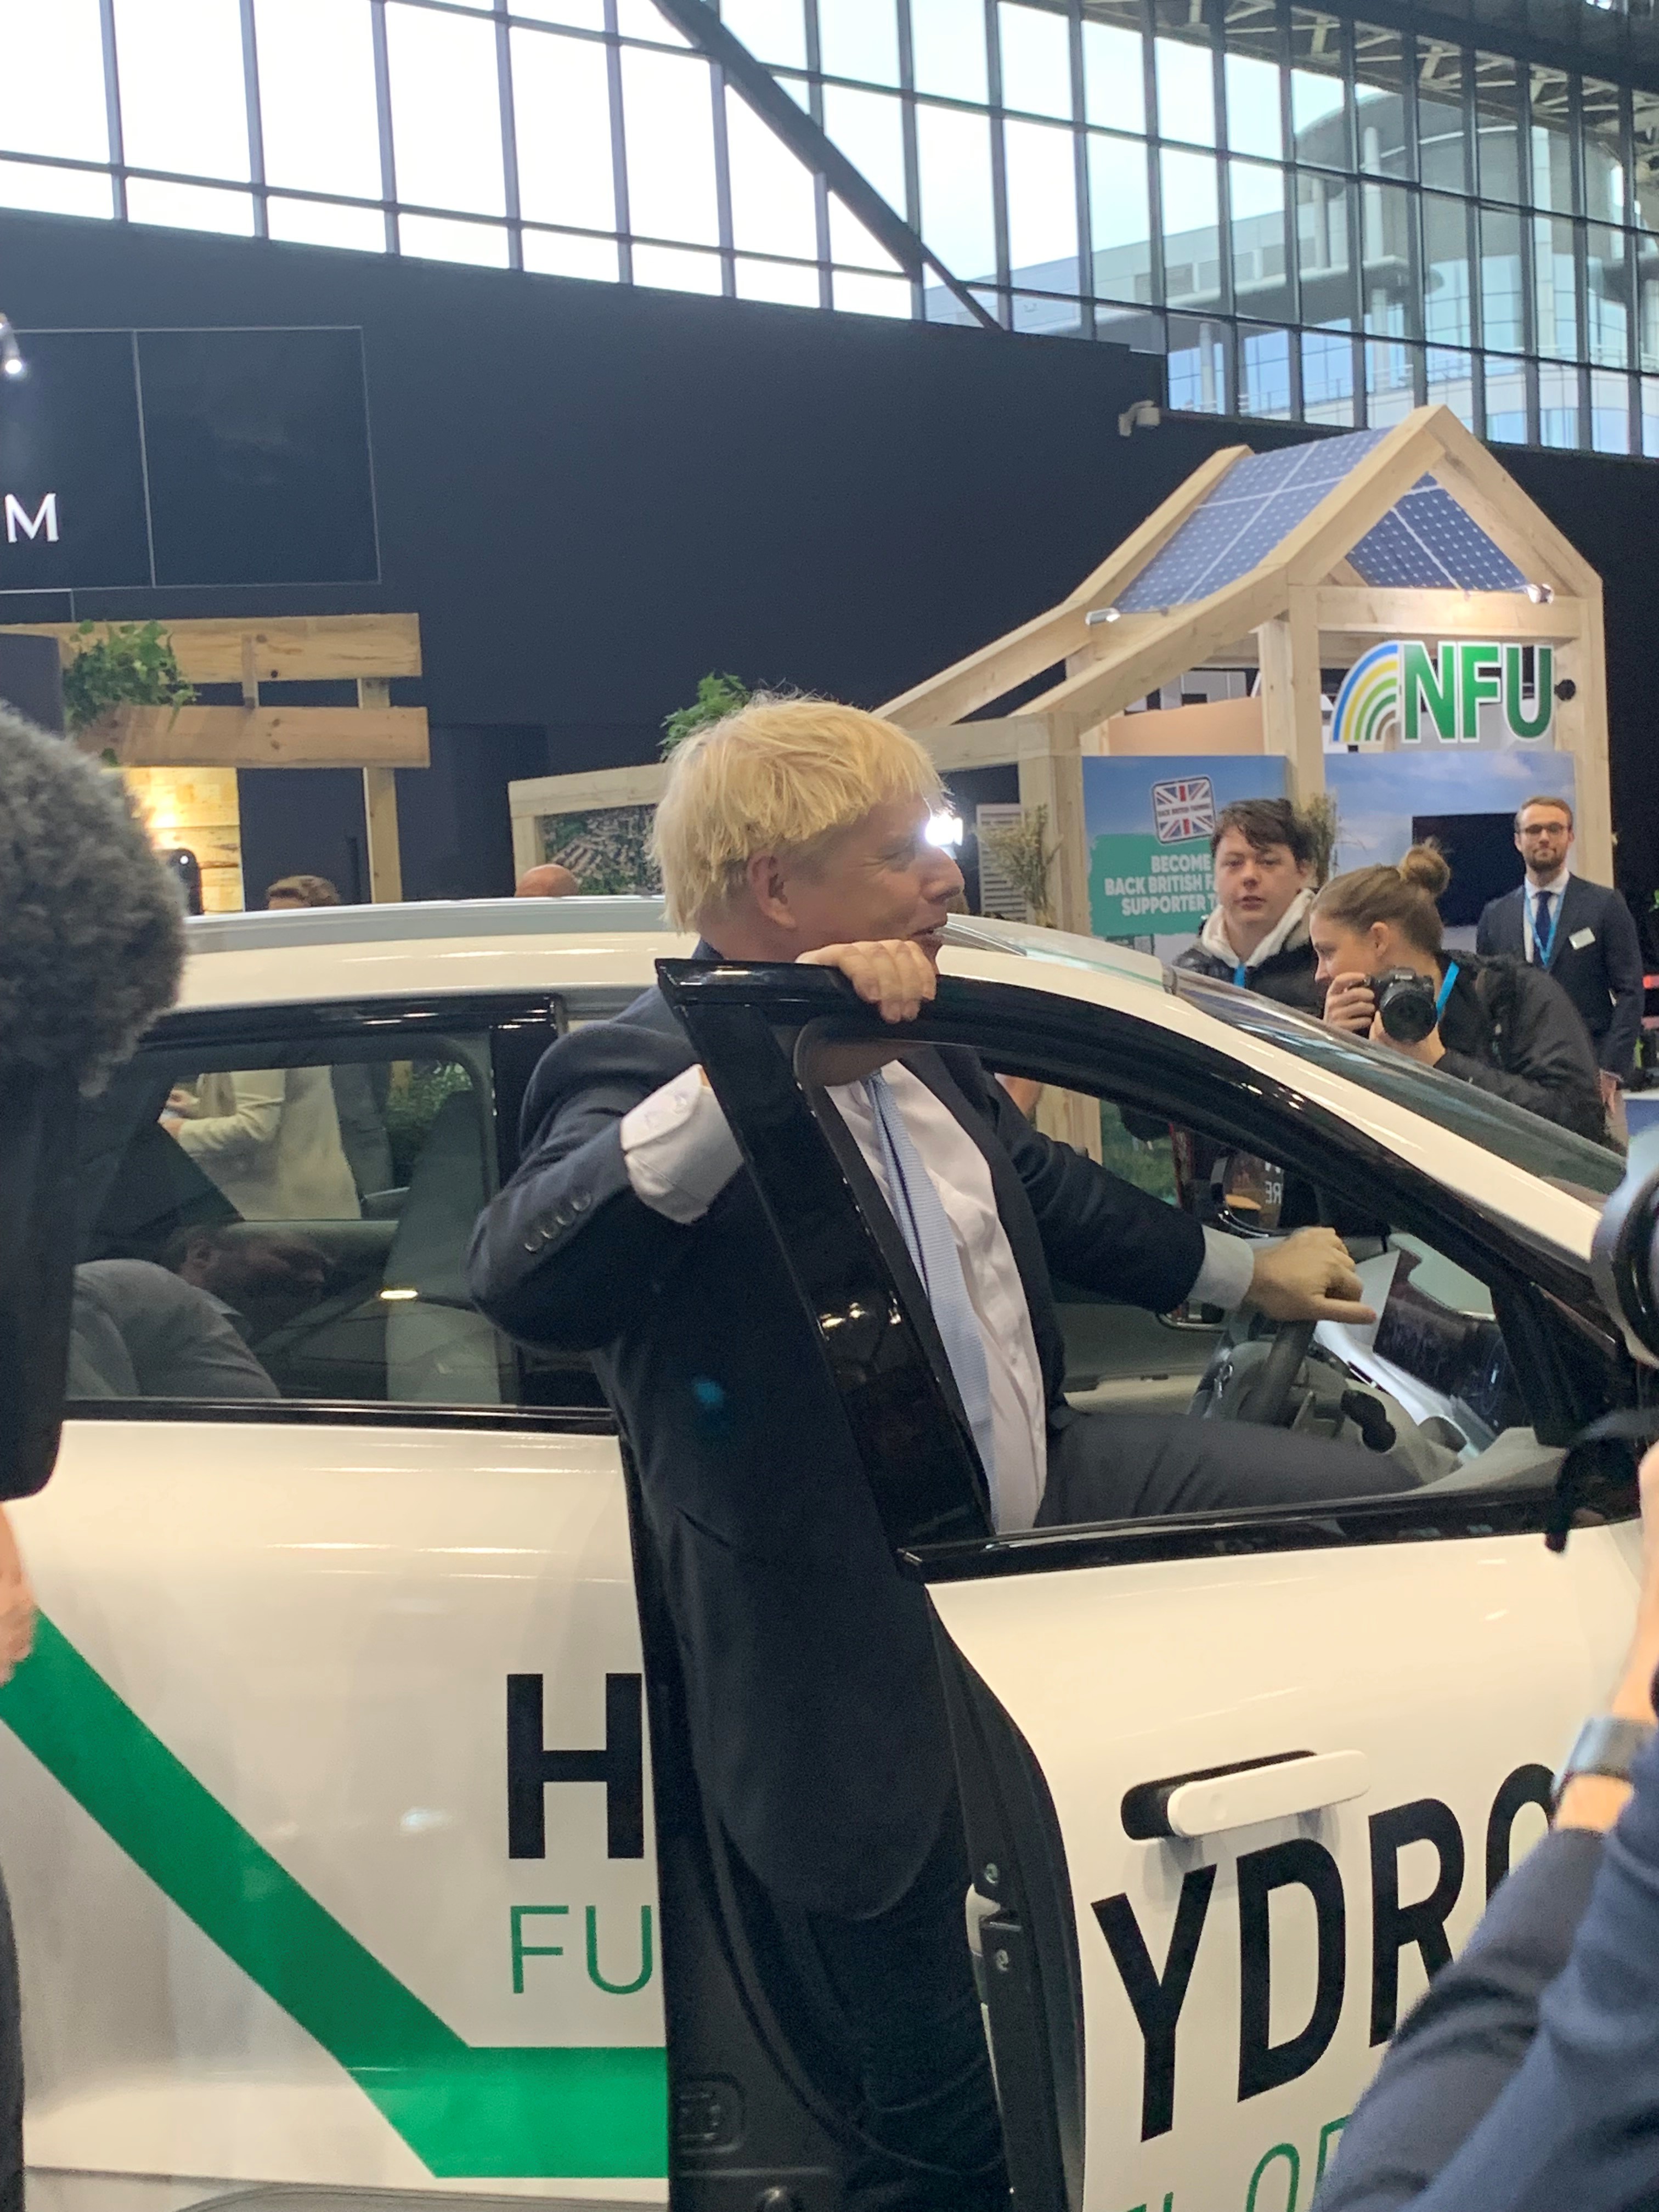 PM Boris Johnson climbs behind the wheel of a hydrogen car from Swindon